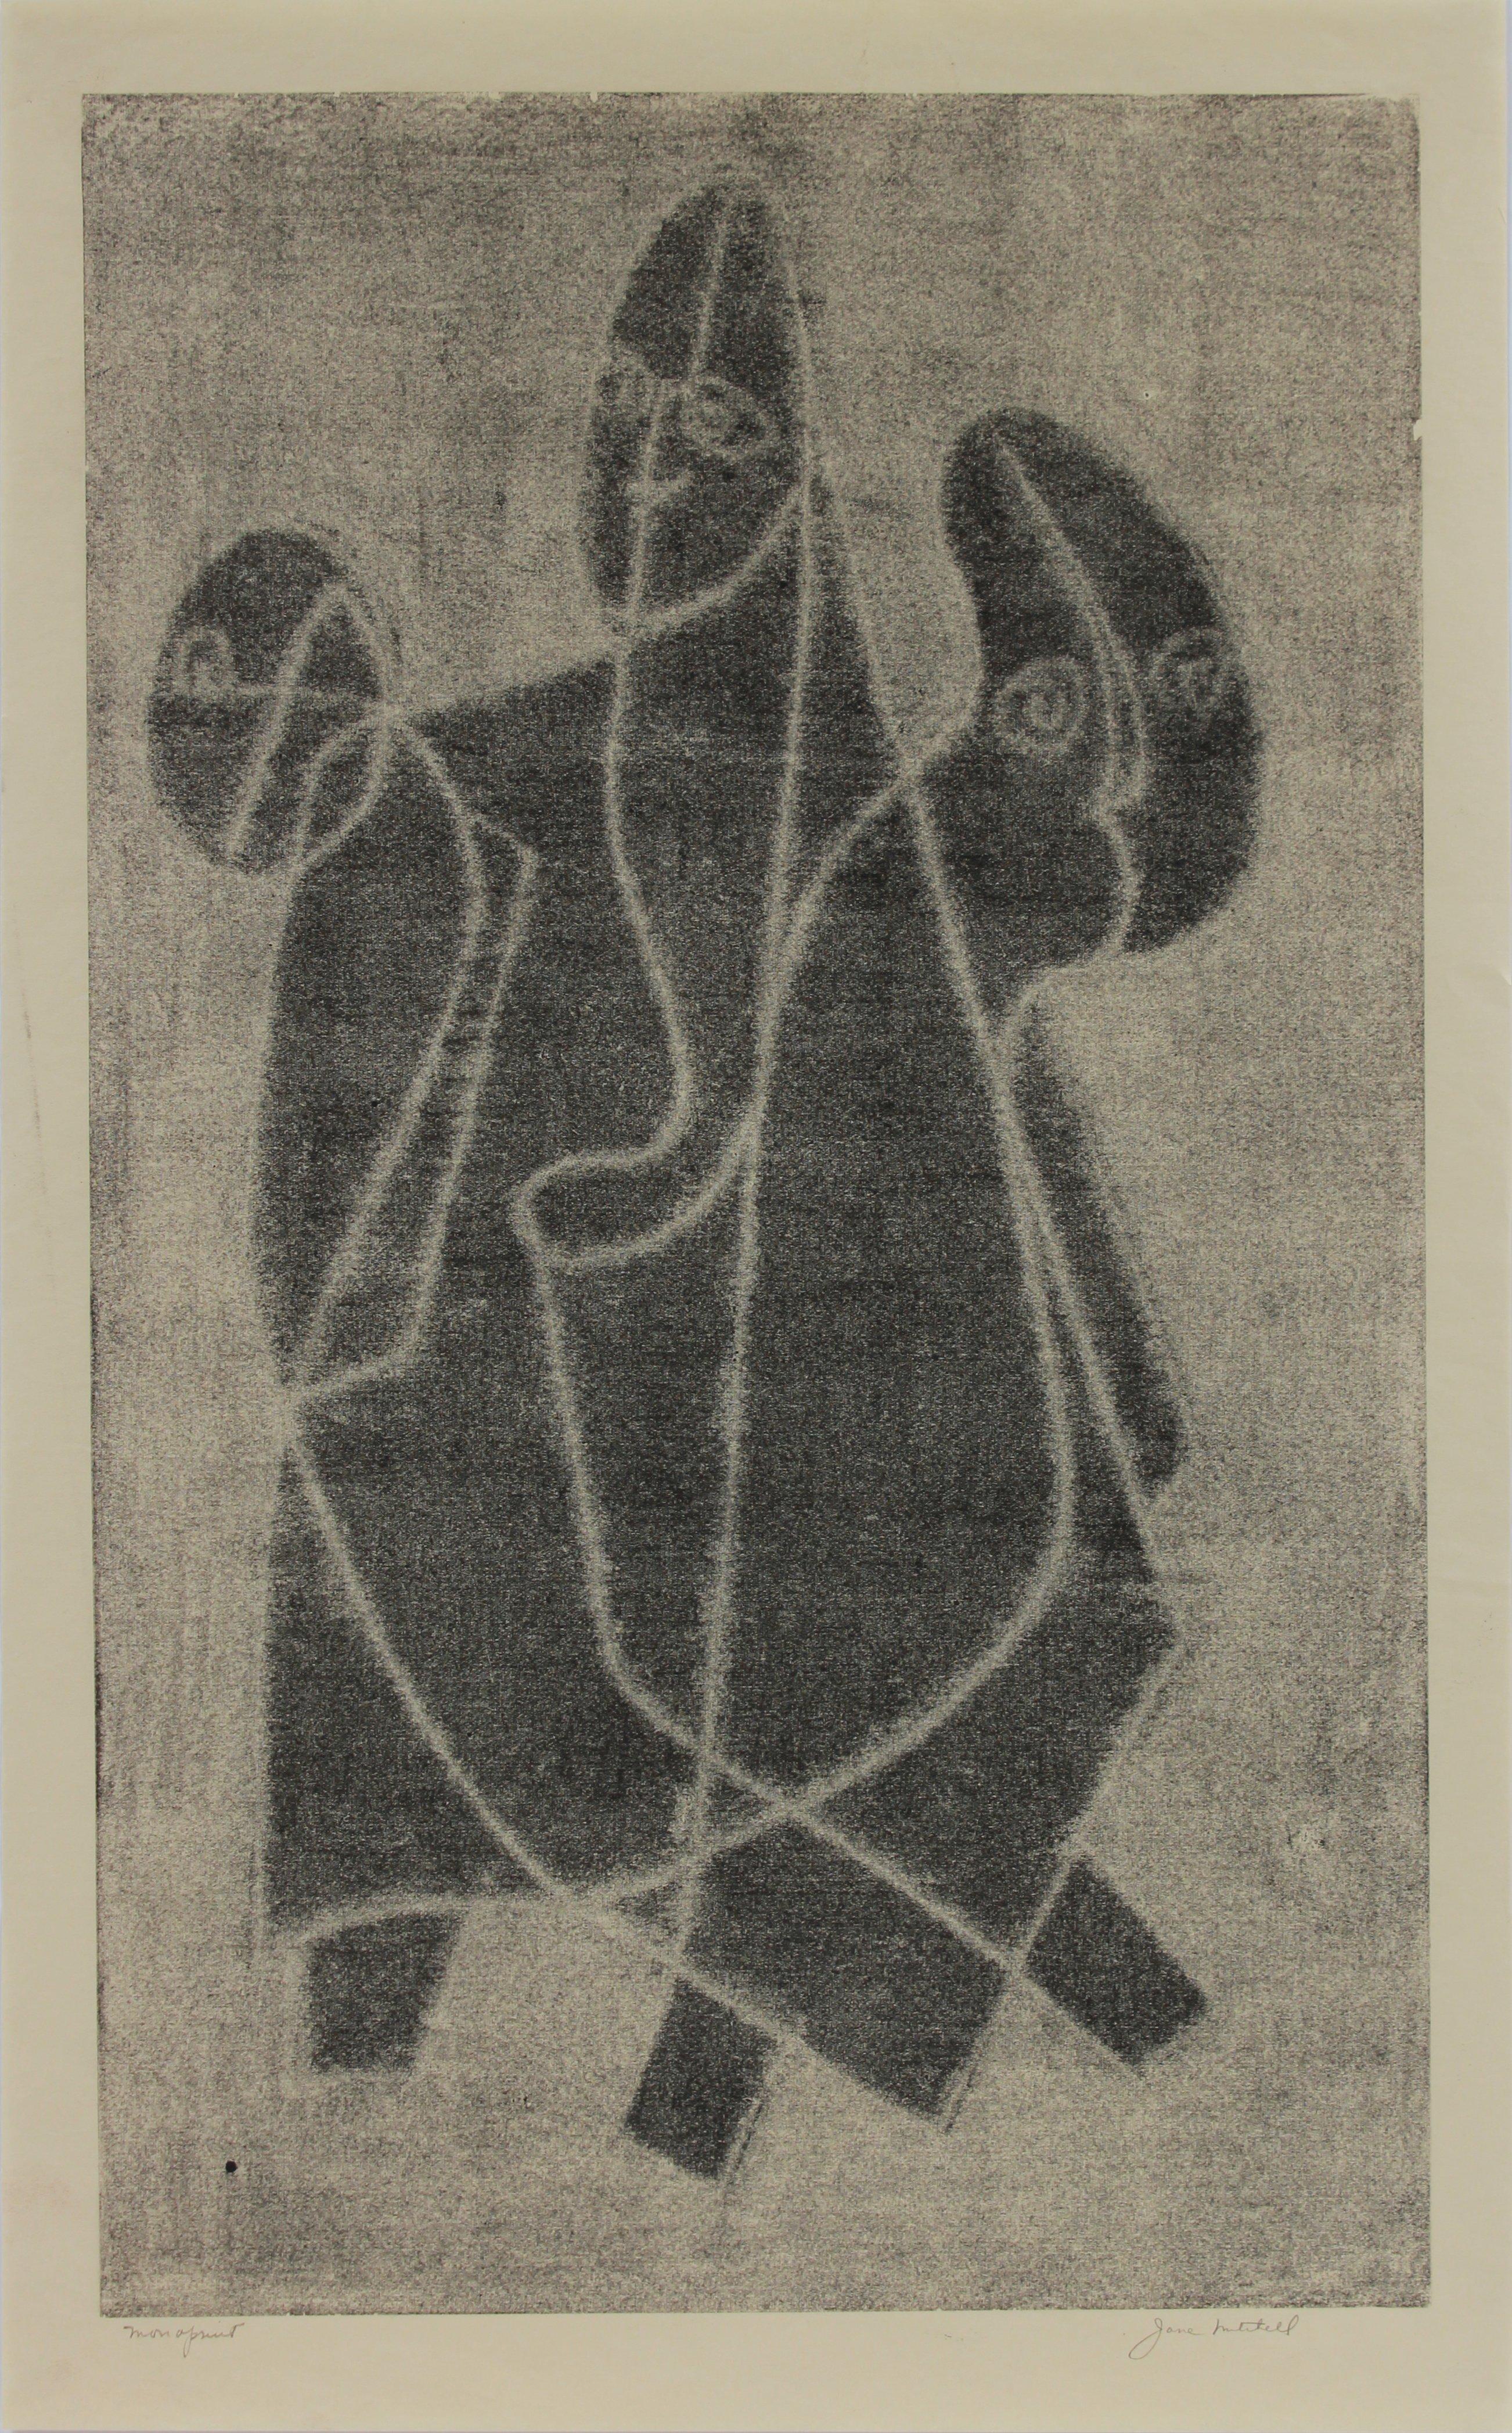 Jane Mitchell Abstract Print - Monochromatic Geometric Figure Trio 1970s Monotype